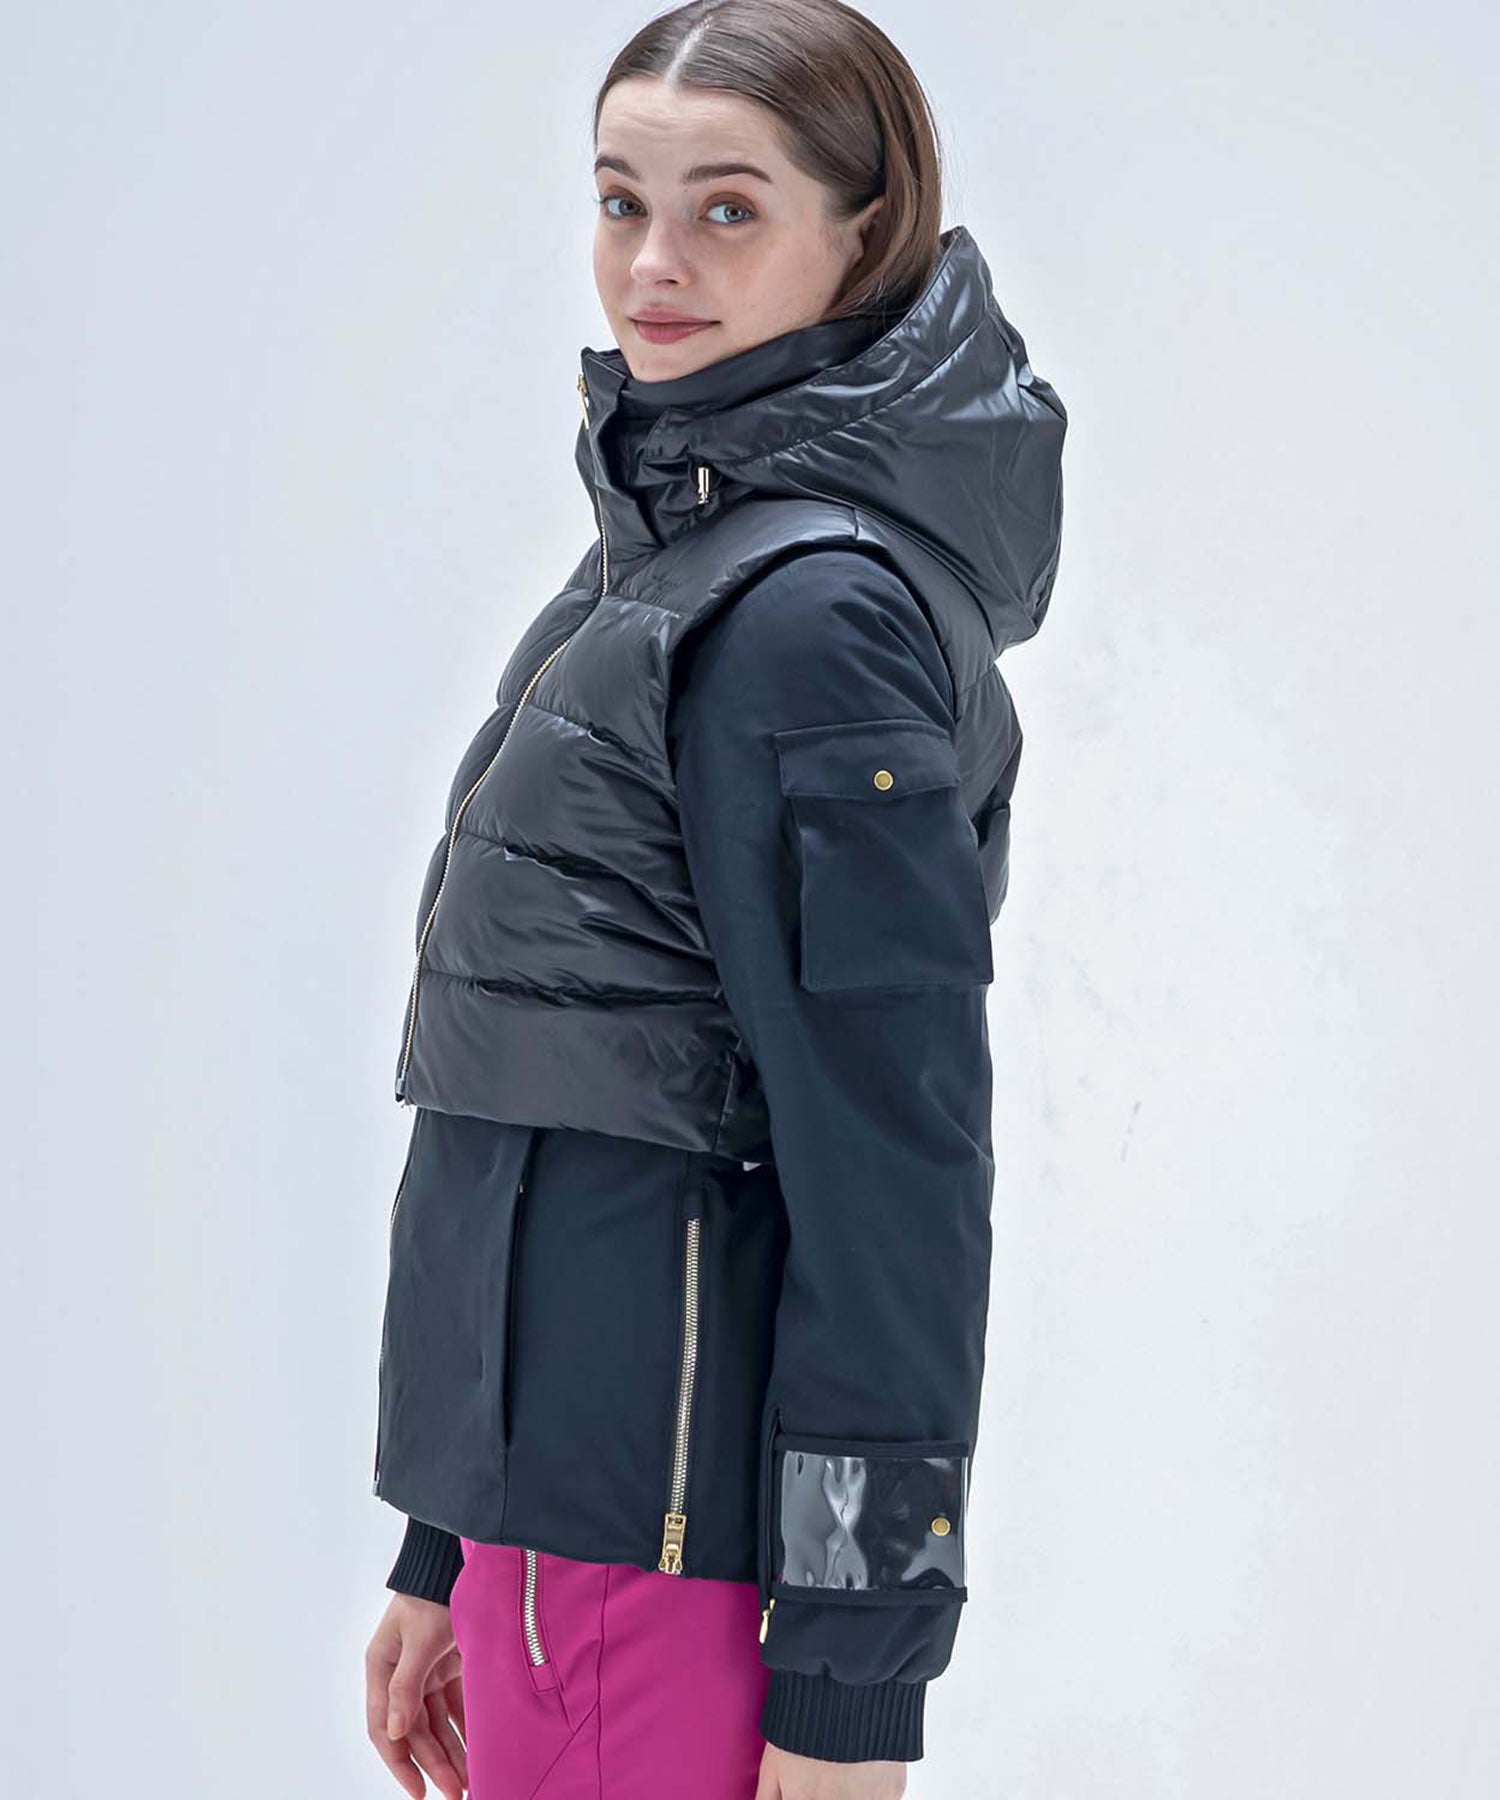 【WOMENS】スキーウェア アウタージャケット トップス Super Space-Time 3way Jacket / GRACE /phenixスキーウェア23AW新作